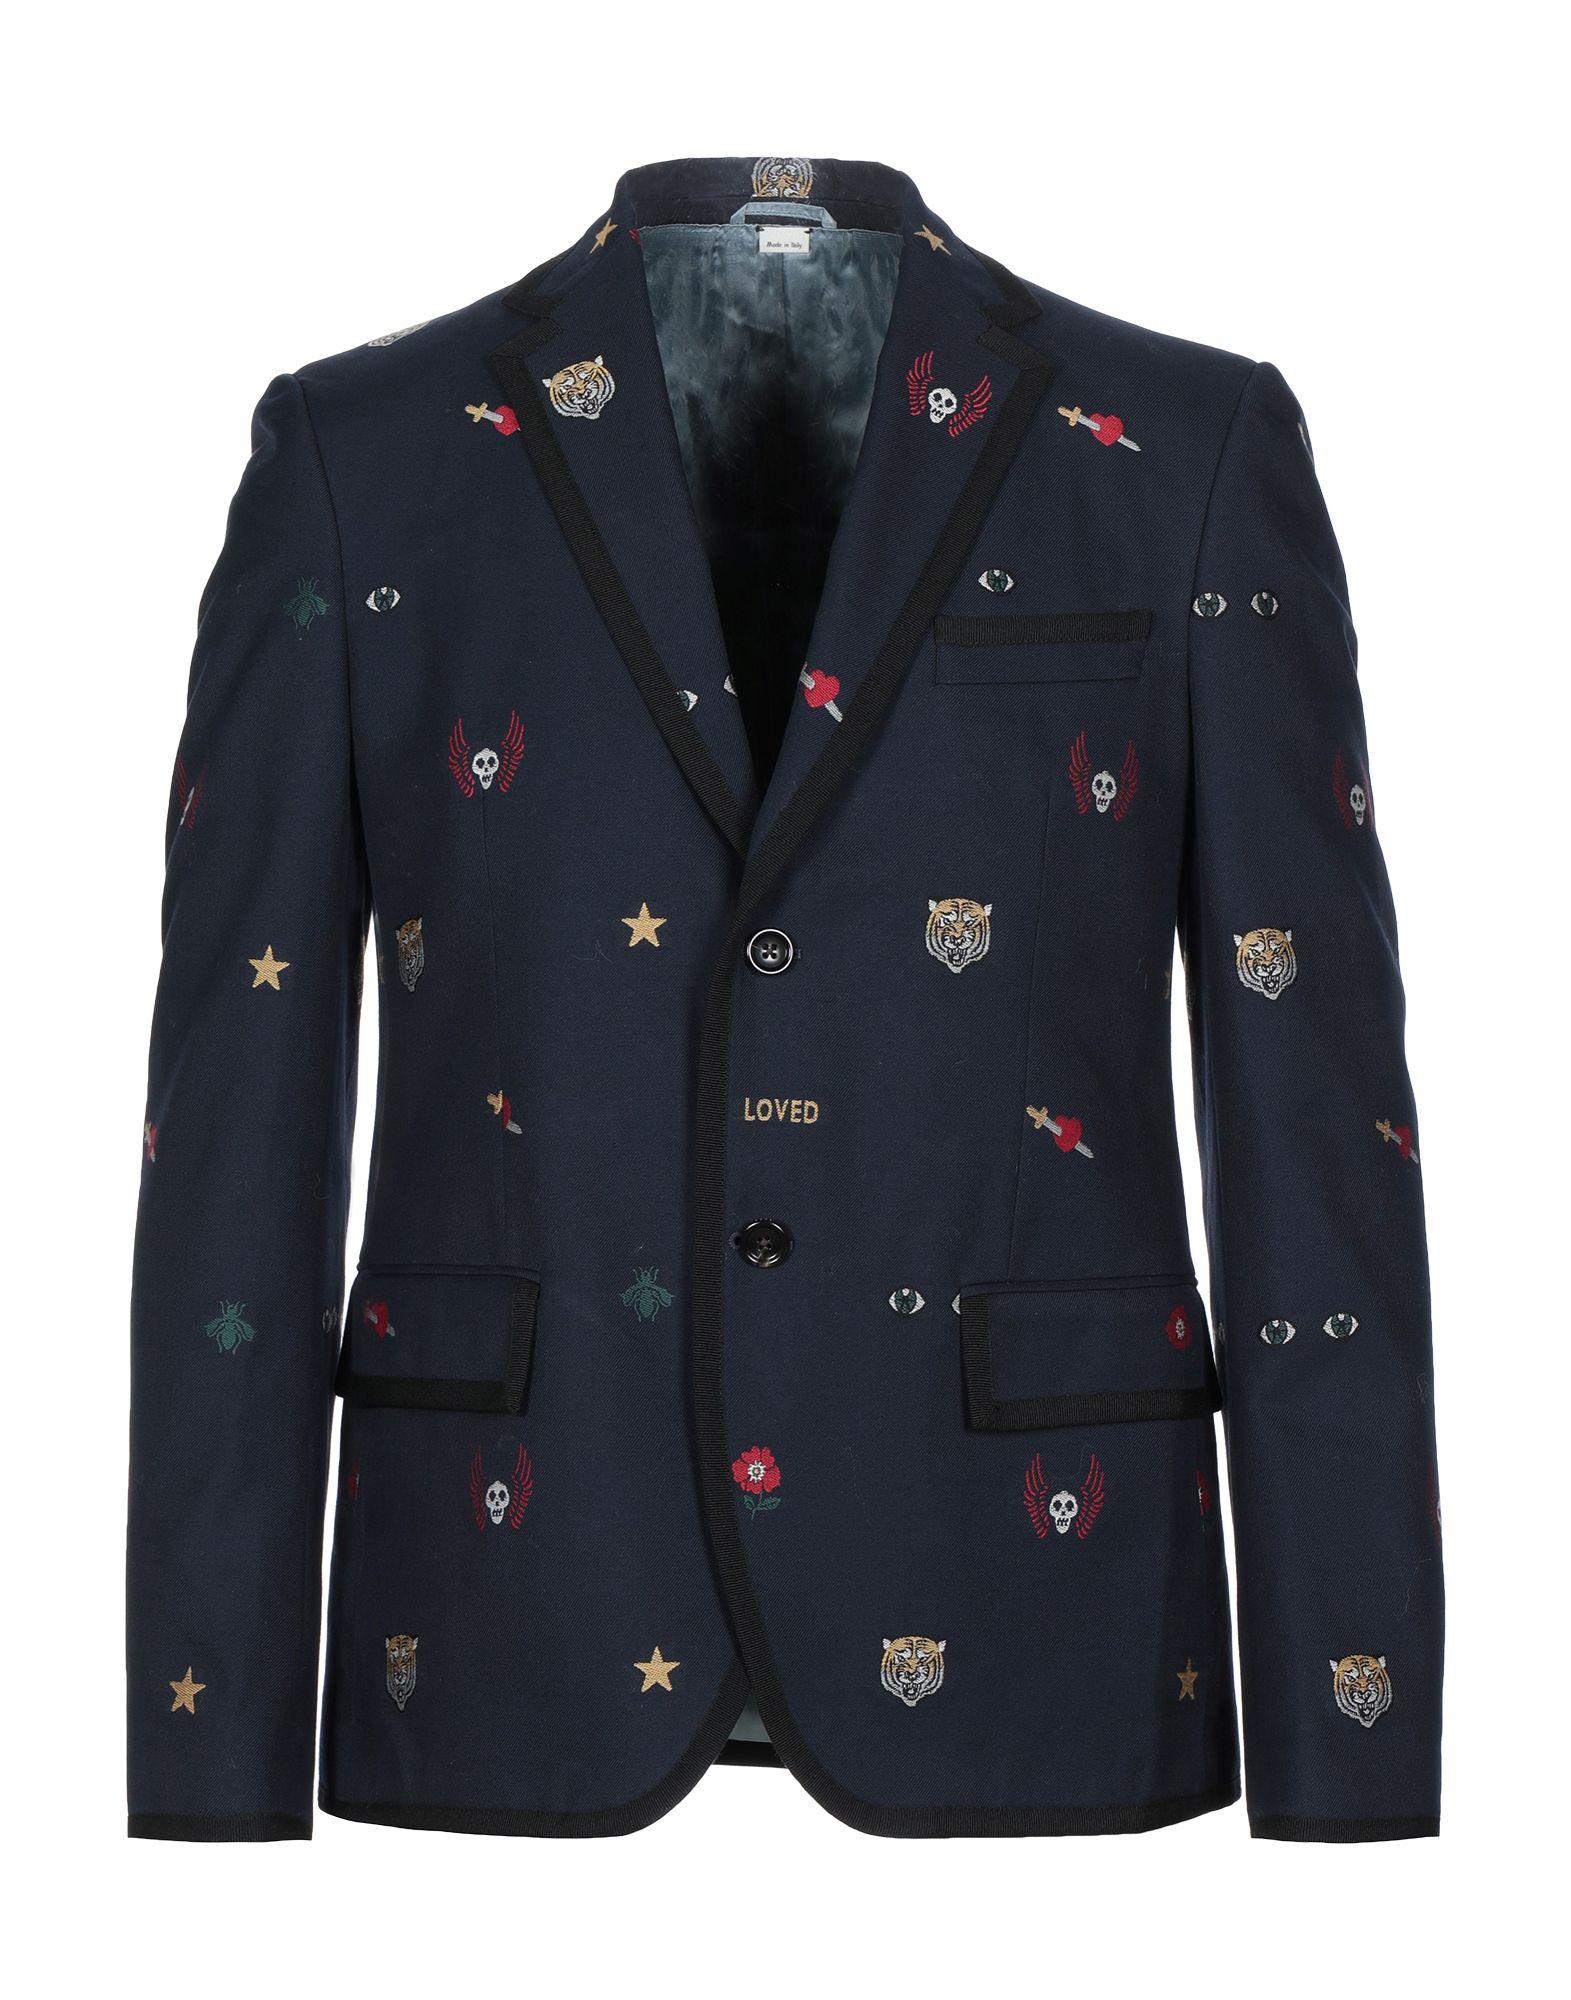 Gucci Suit Jacket in Dark Blue (Blue) for Men - Lyst